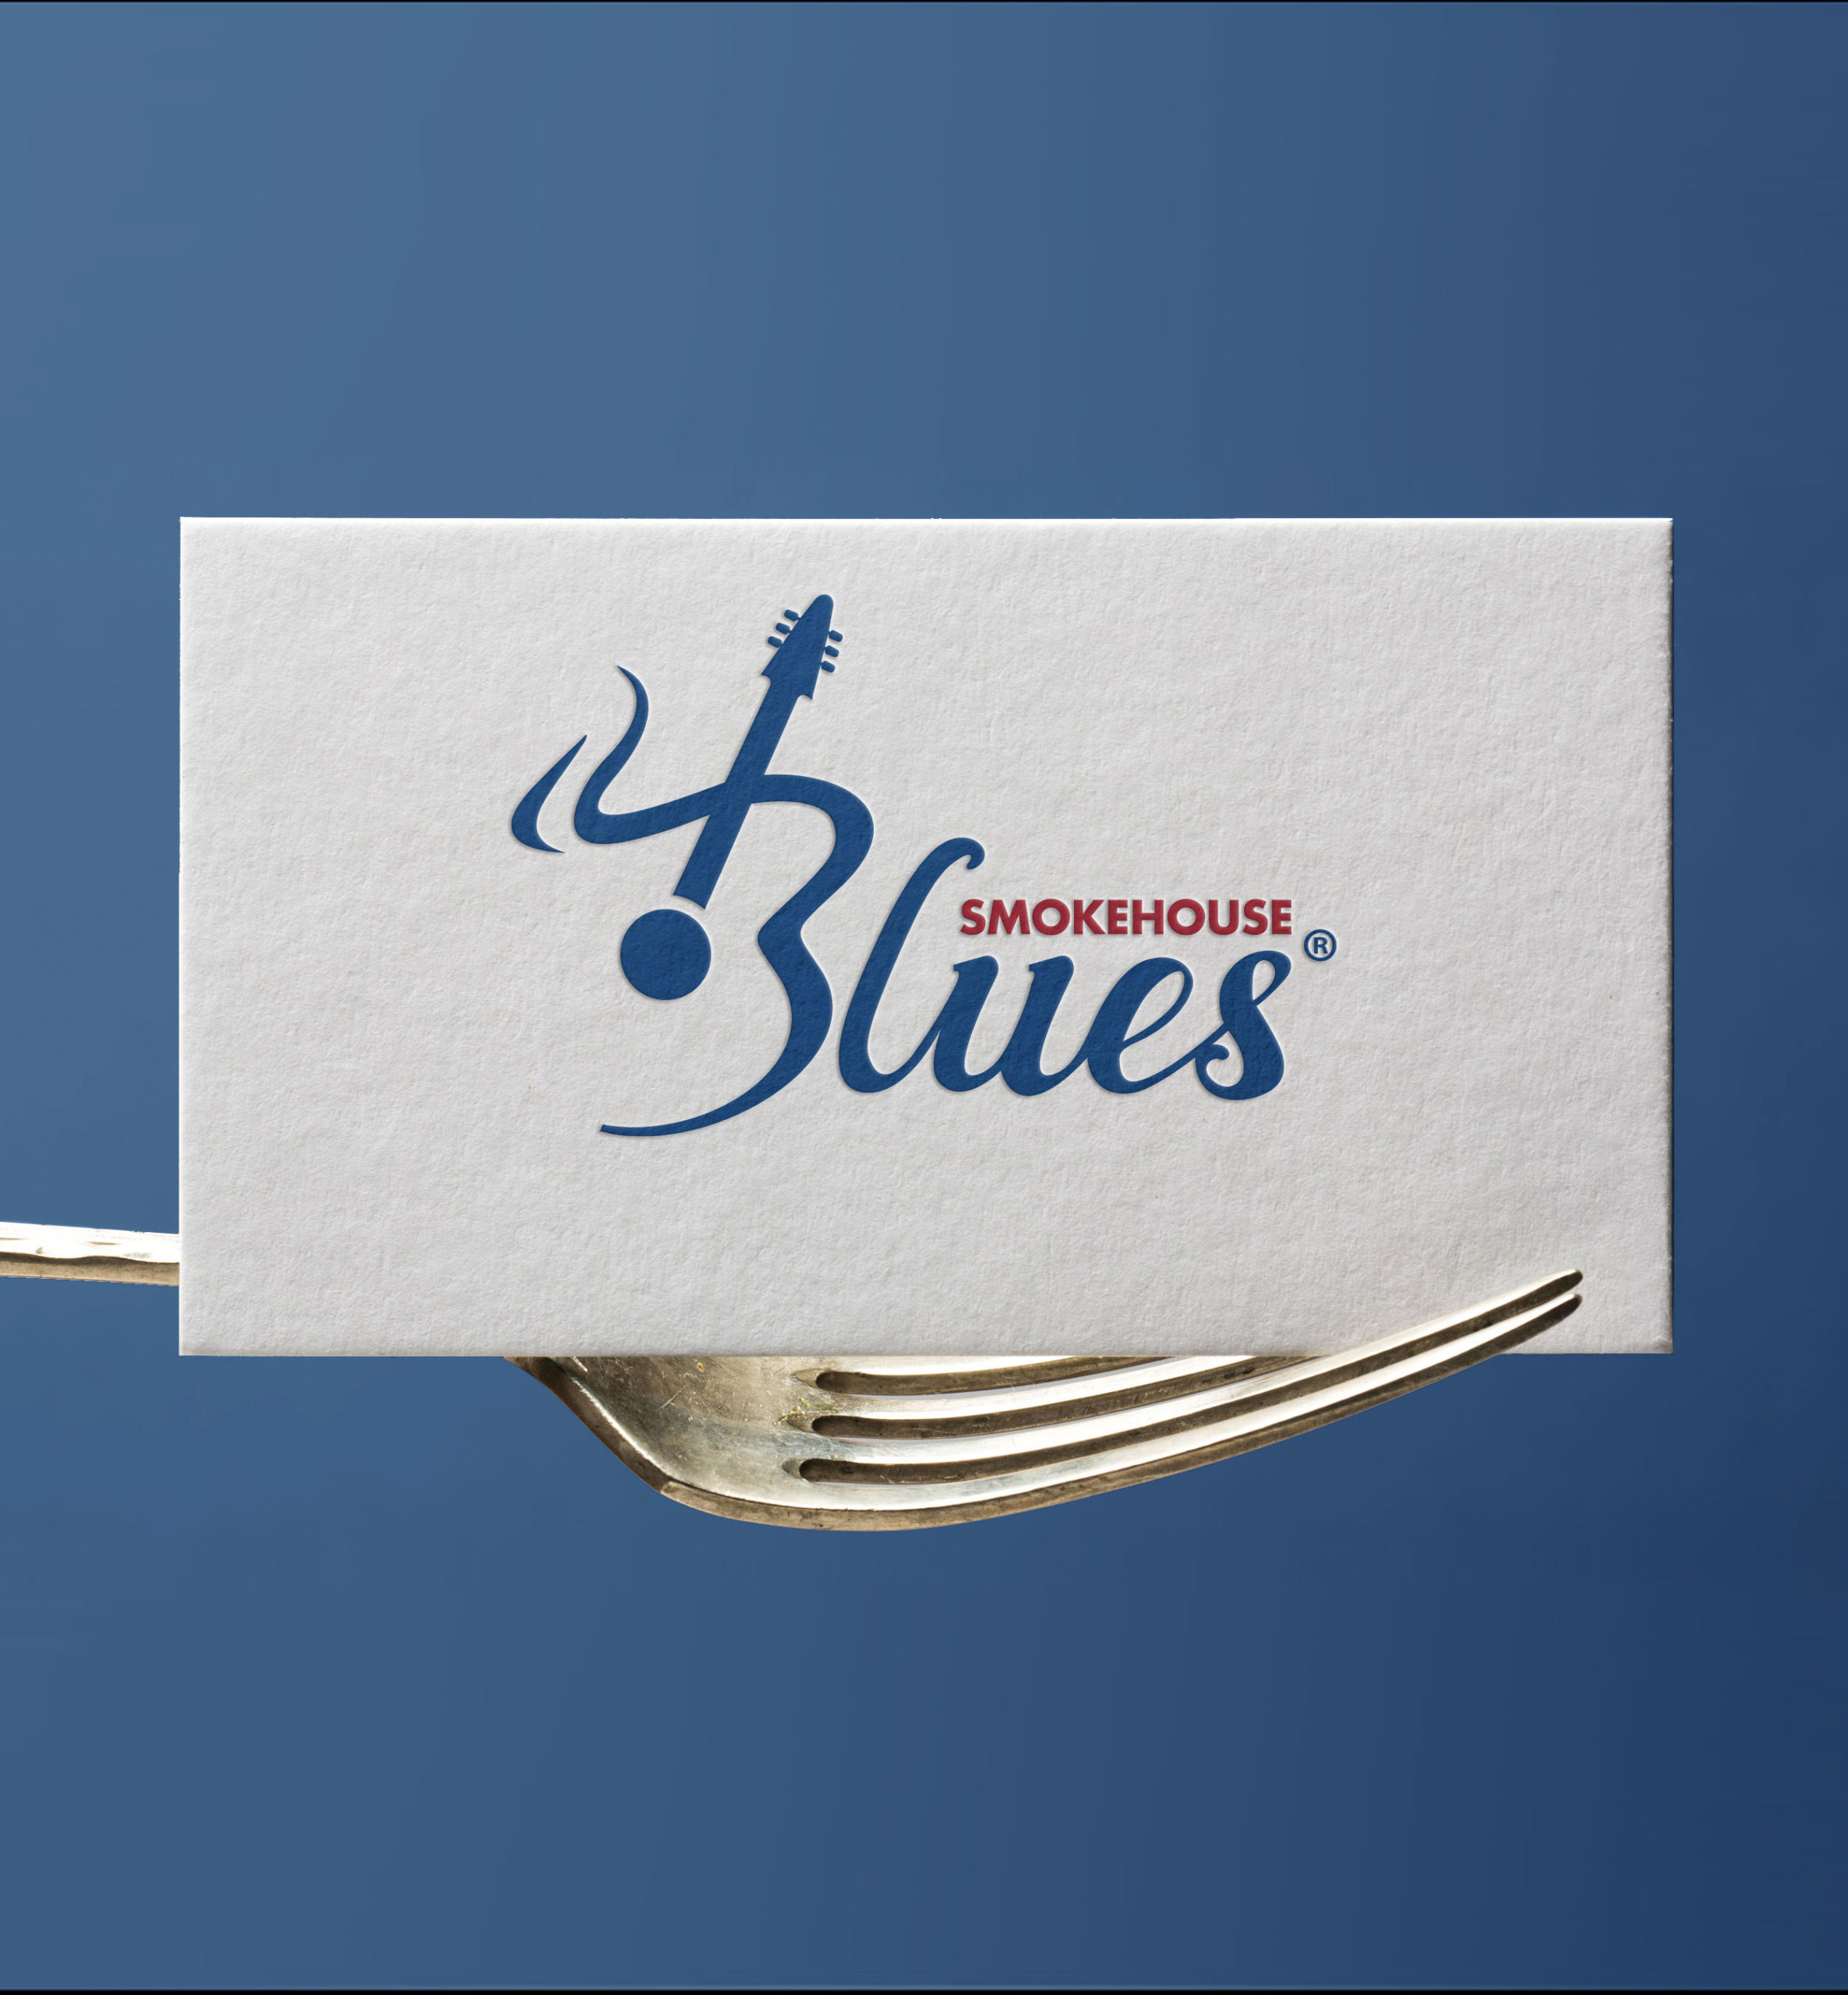 Restaurant Logo Design – Smokehouse Blues